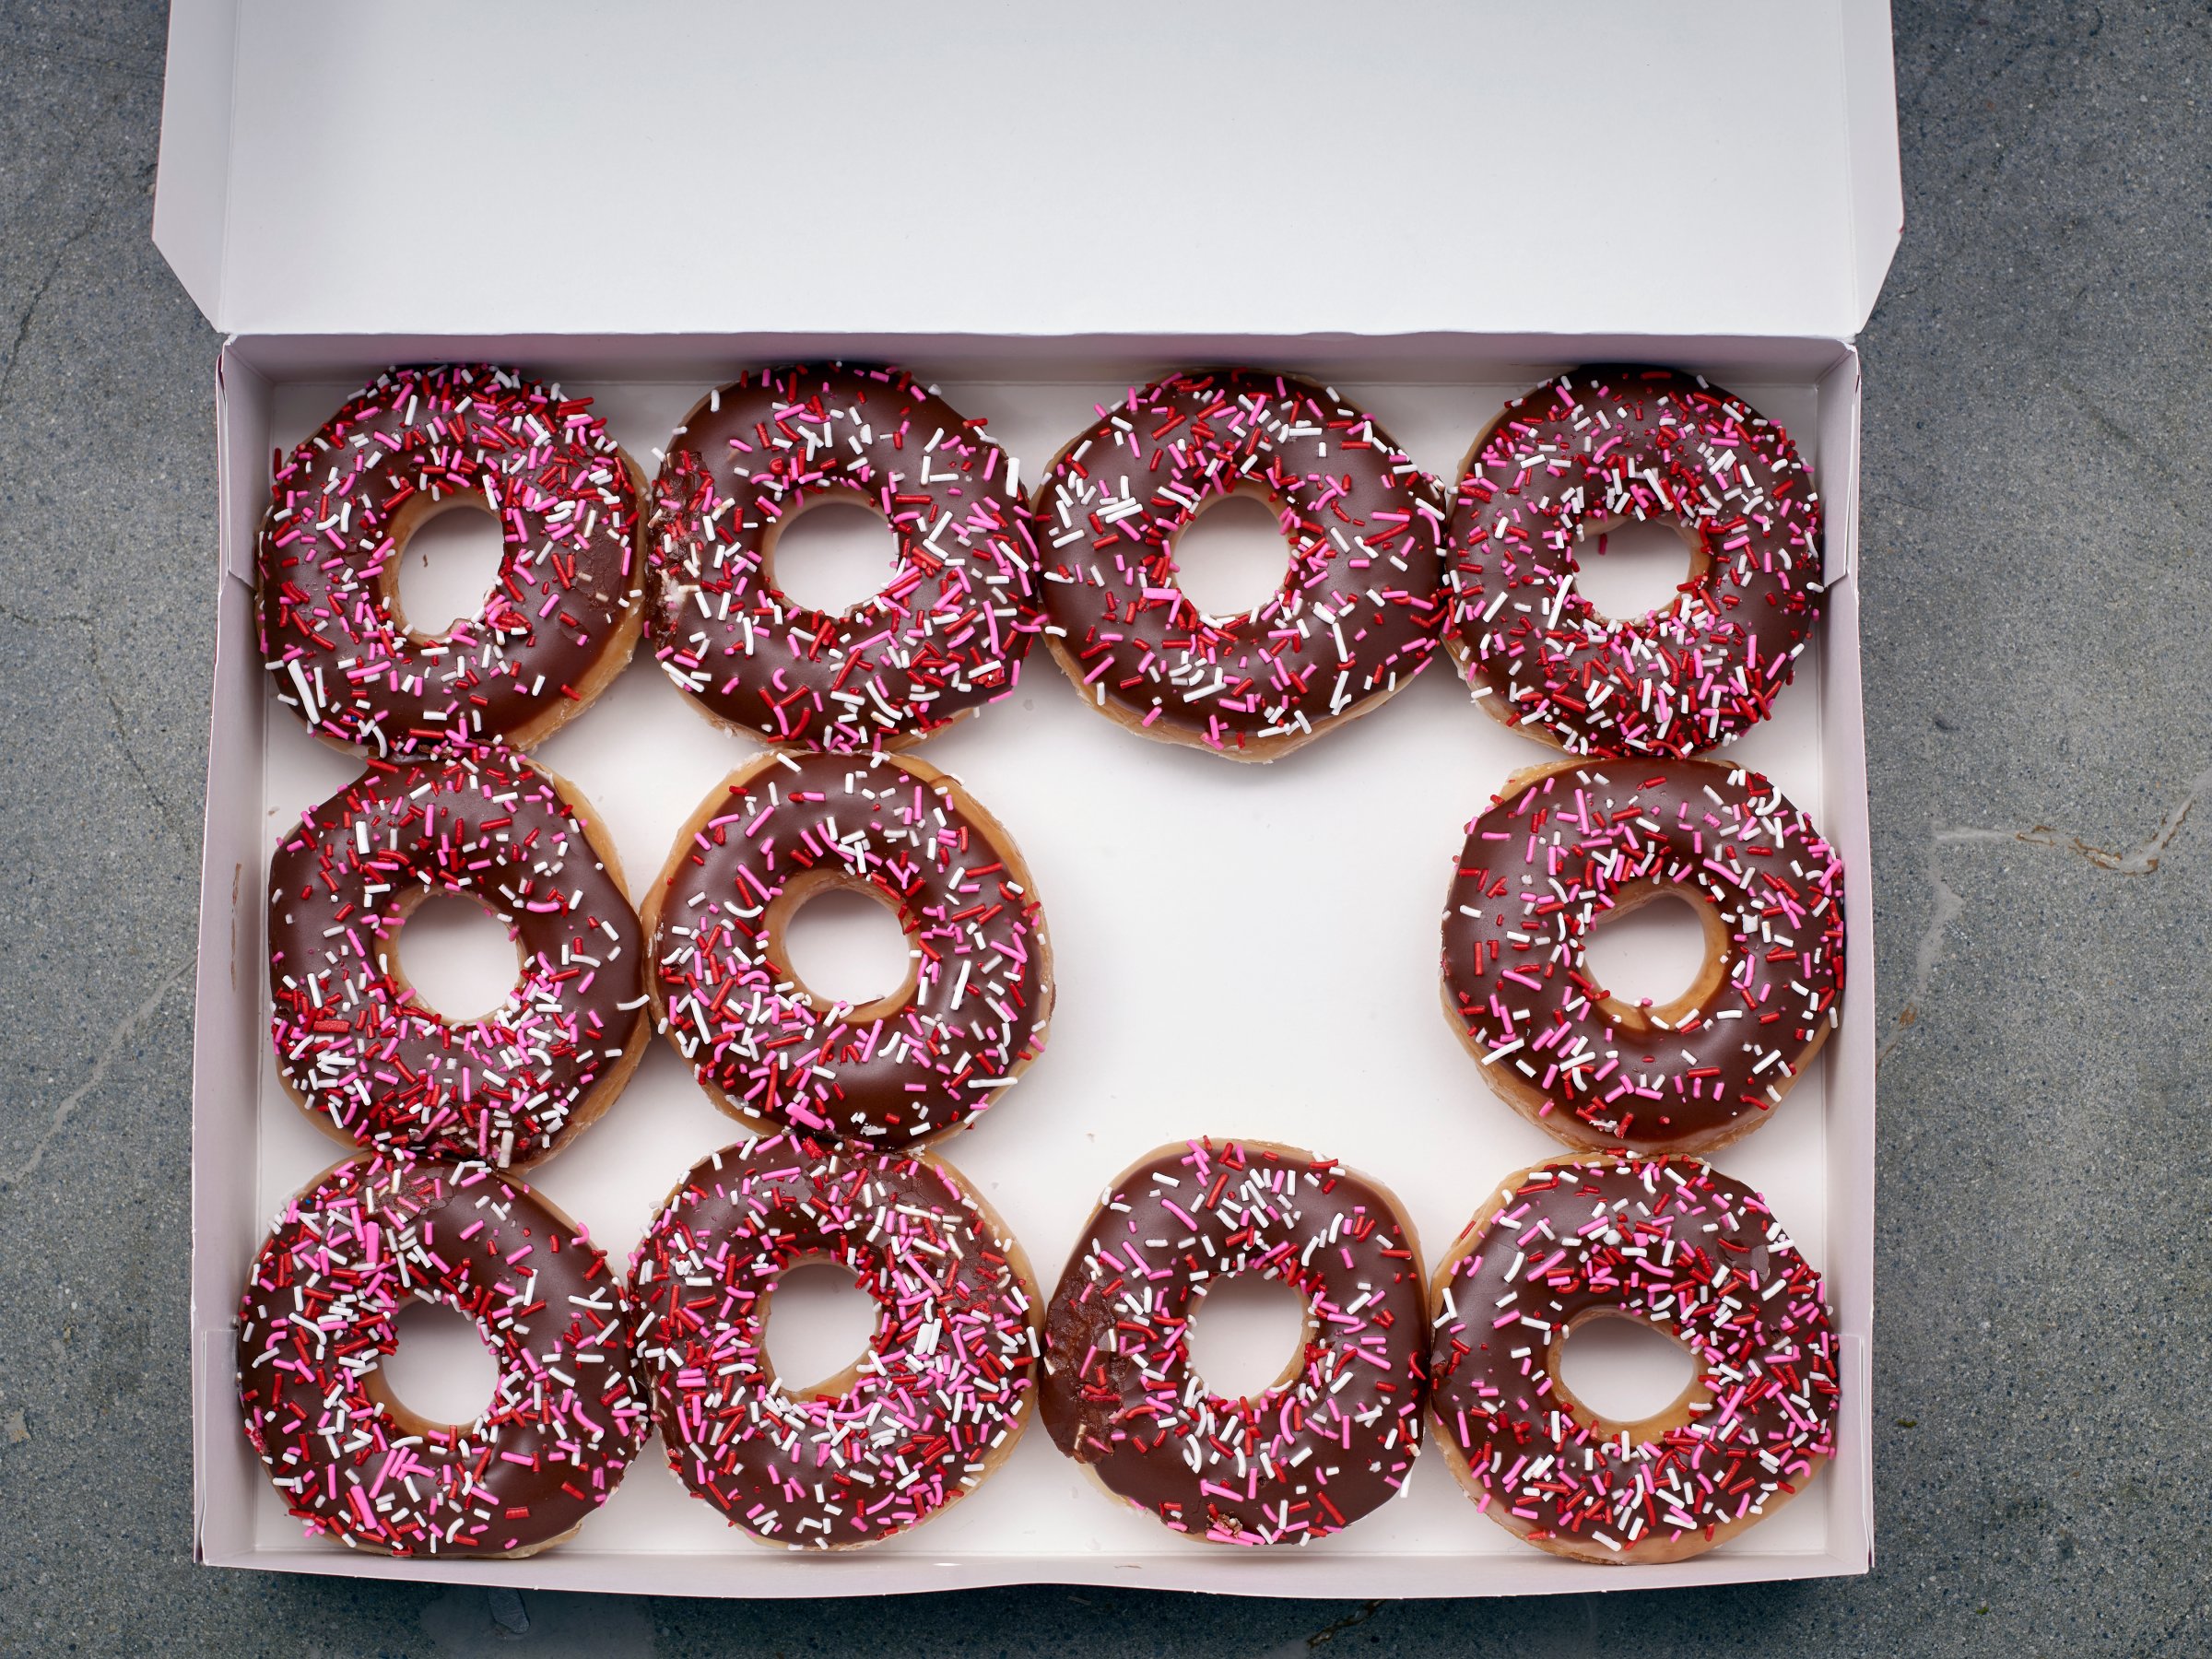 box of 11 doughnuts